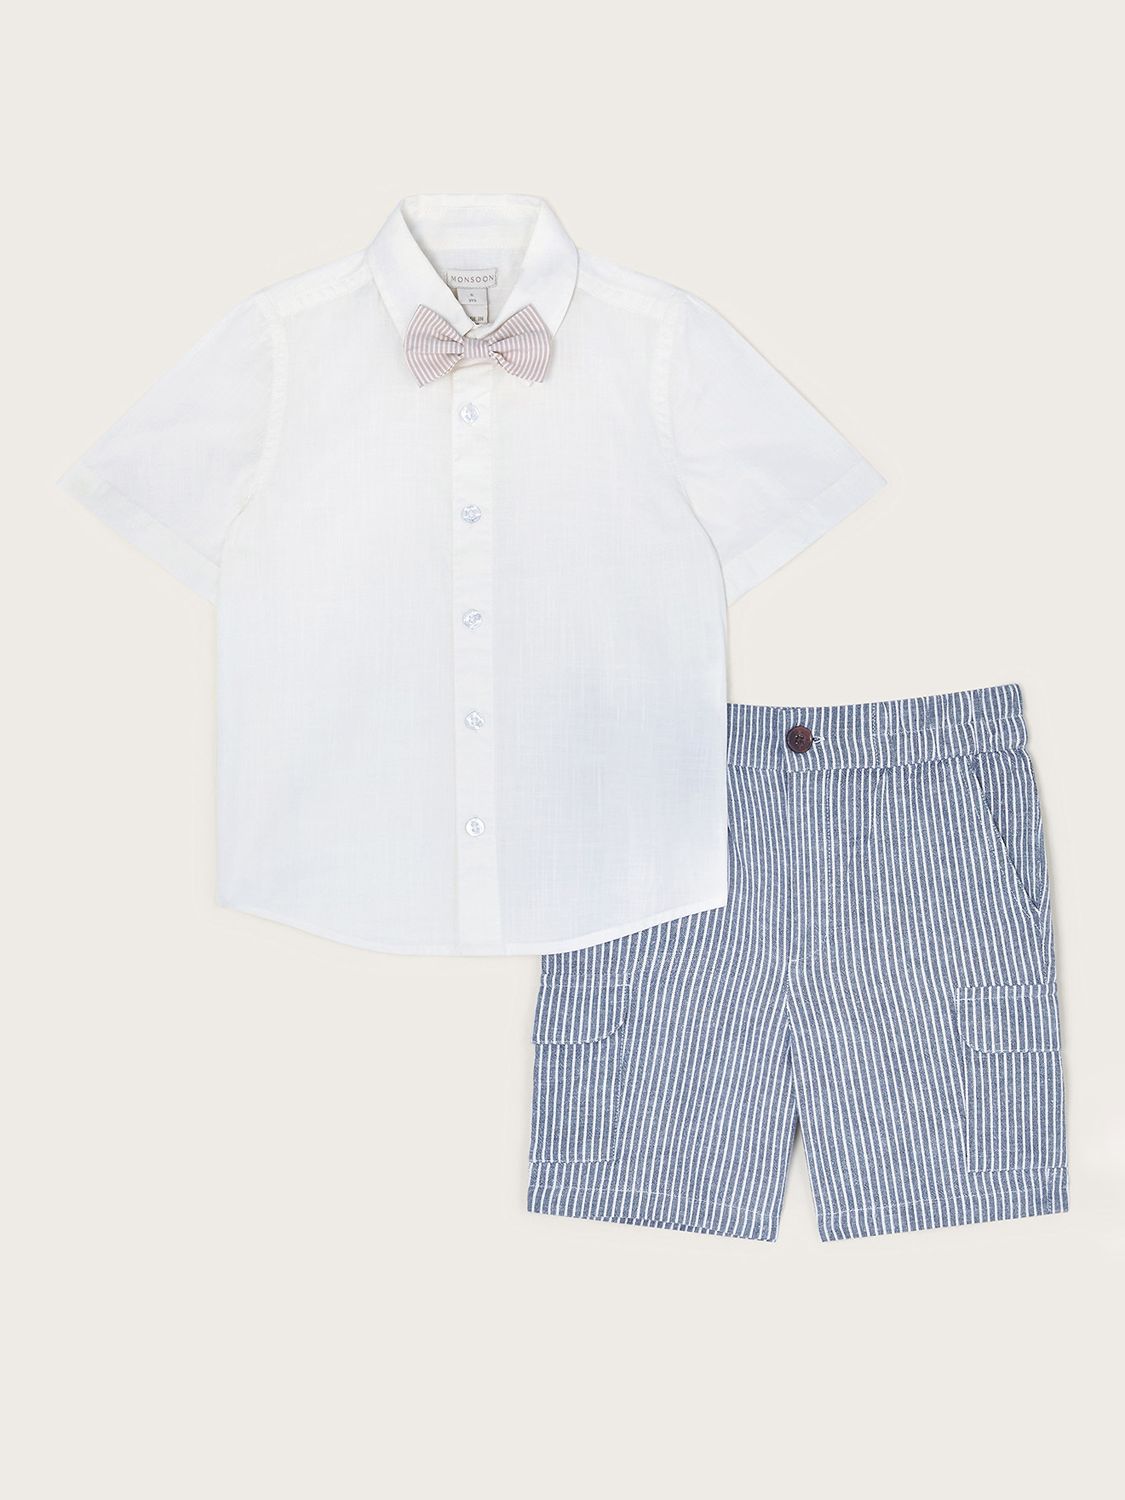 Monsoon Kids' Smart Shirt, Stripe Shorts & Bow Tie Set, Blue/White, 10 years